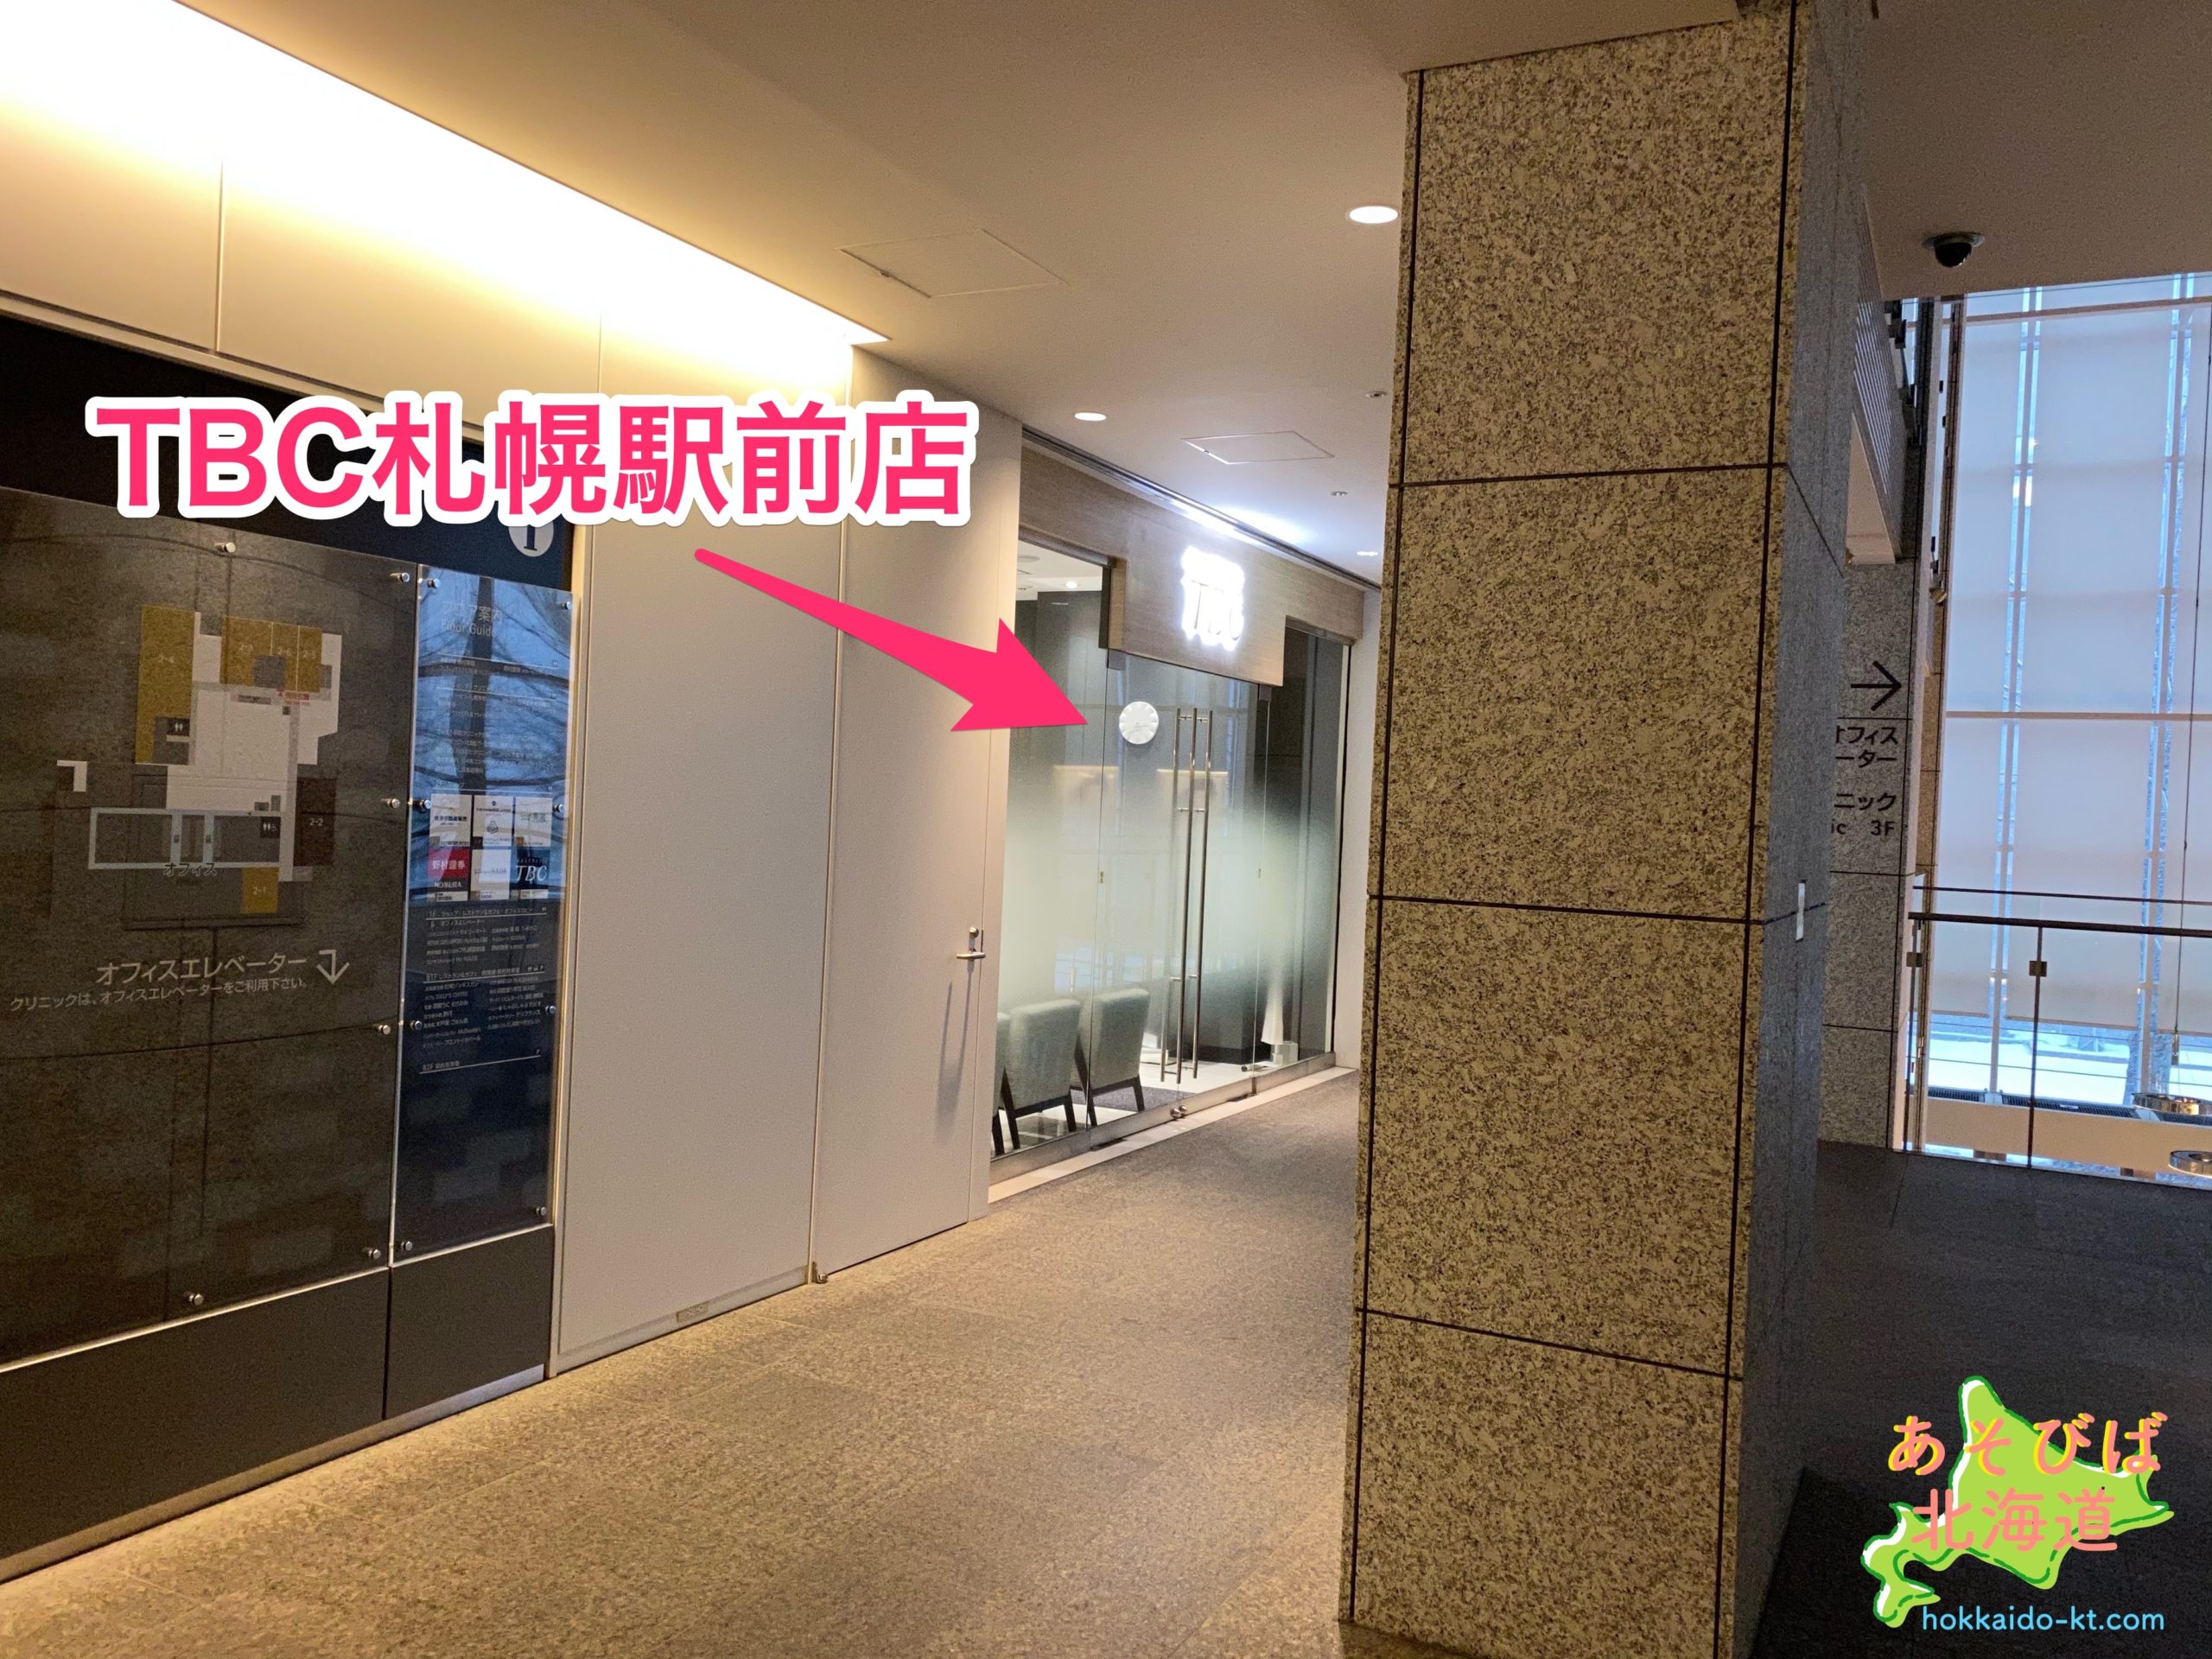 TBC札幌駅前店入口